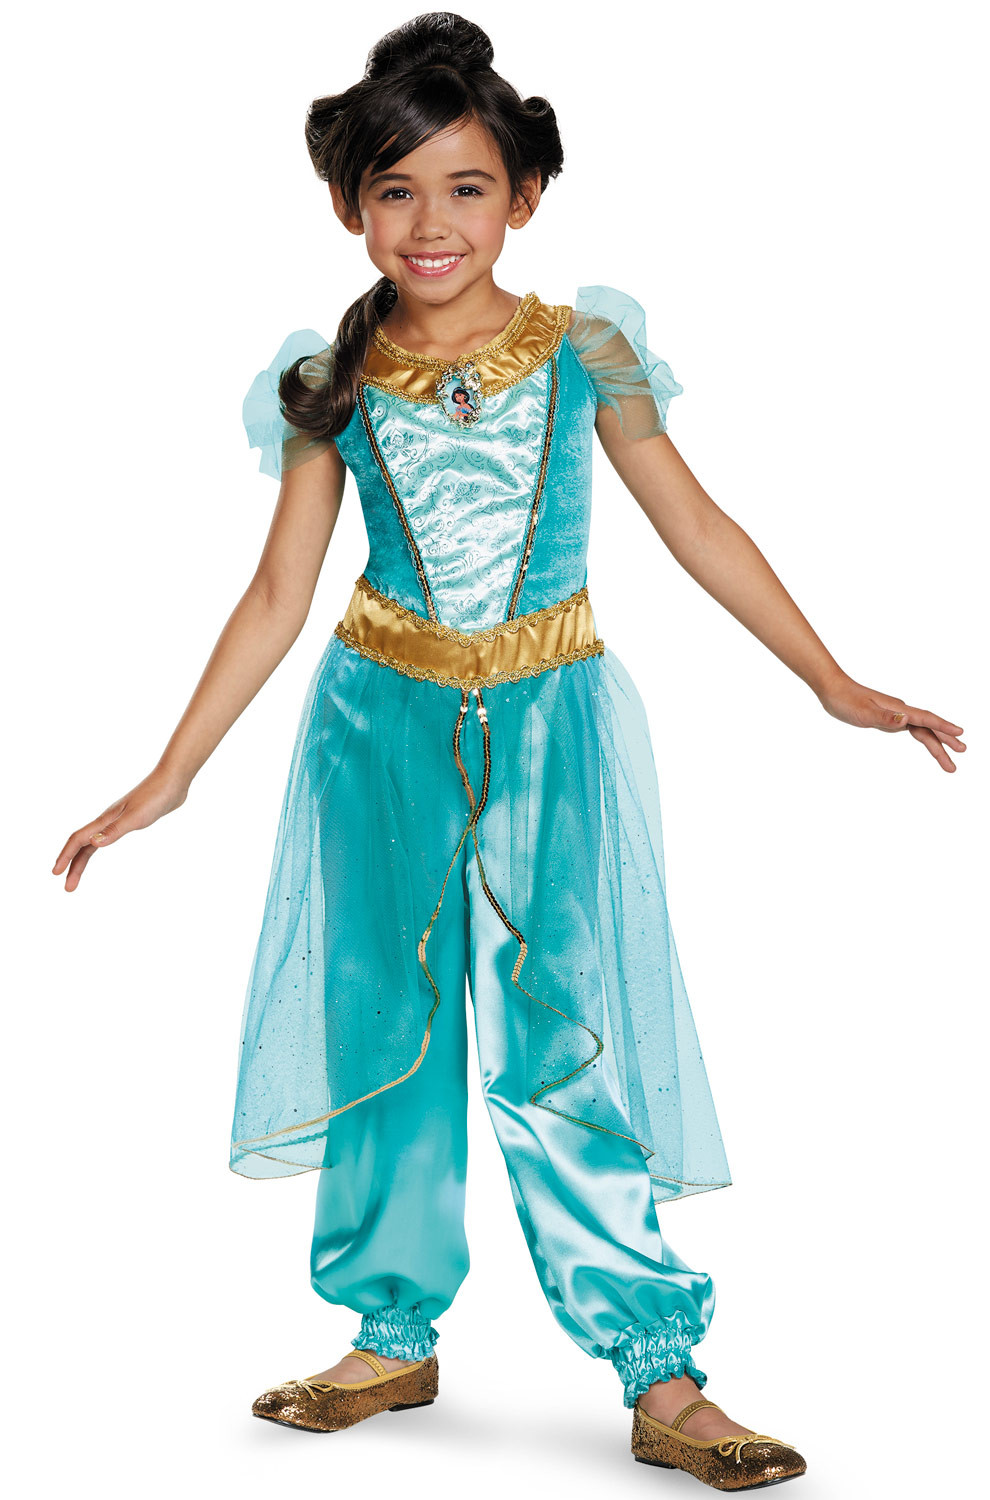 Best ideas about Princess Jasmine DIY Costume
. Save or Pin Disney Aladdin Princess Jasmine Deluxe Child Costume Now.